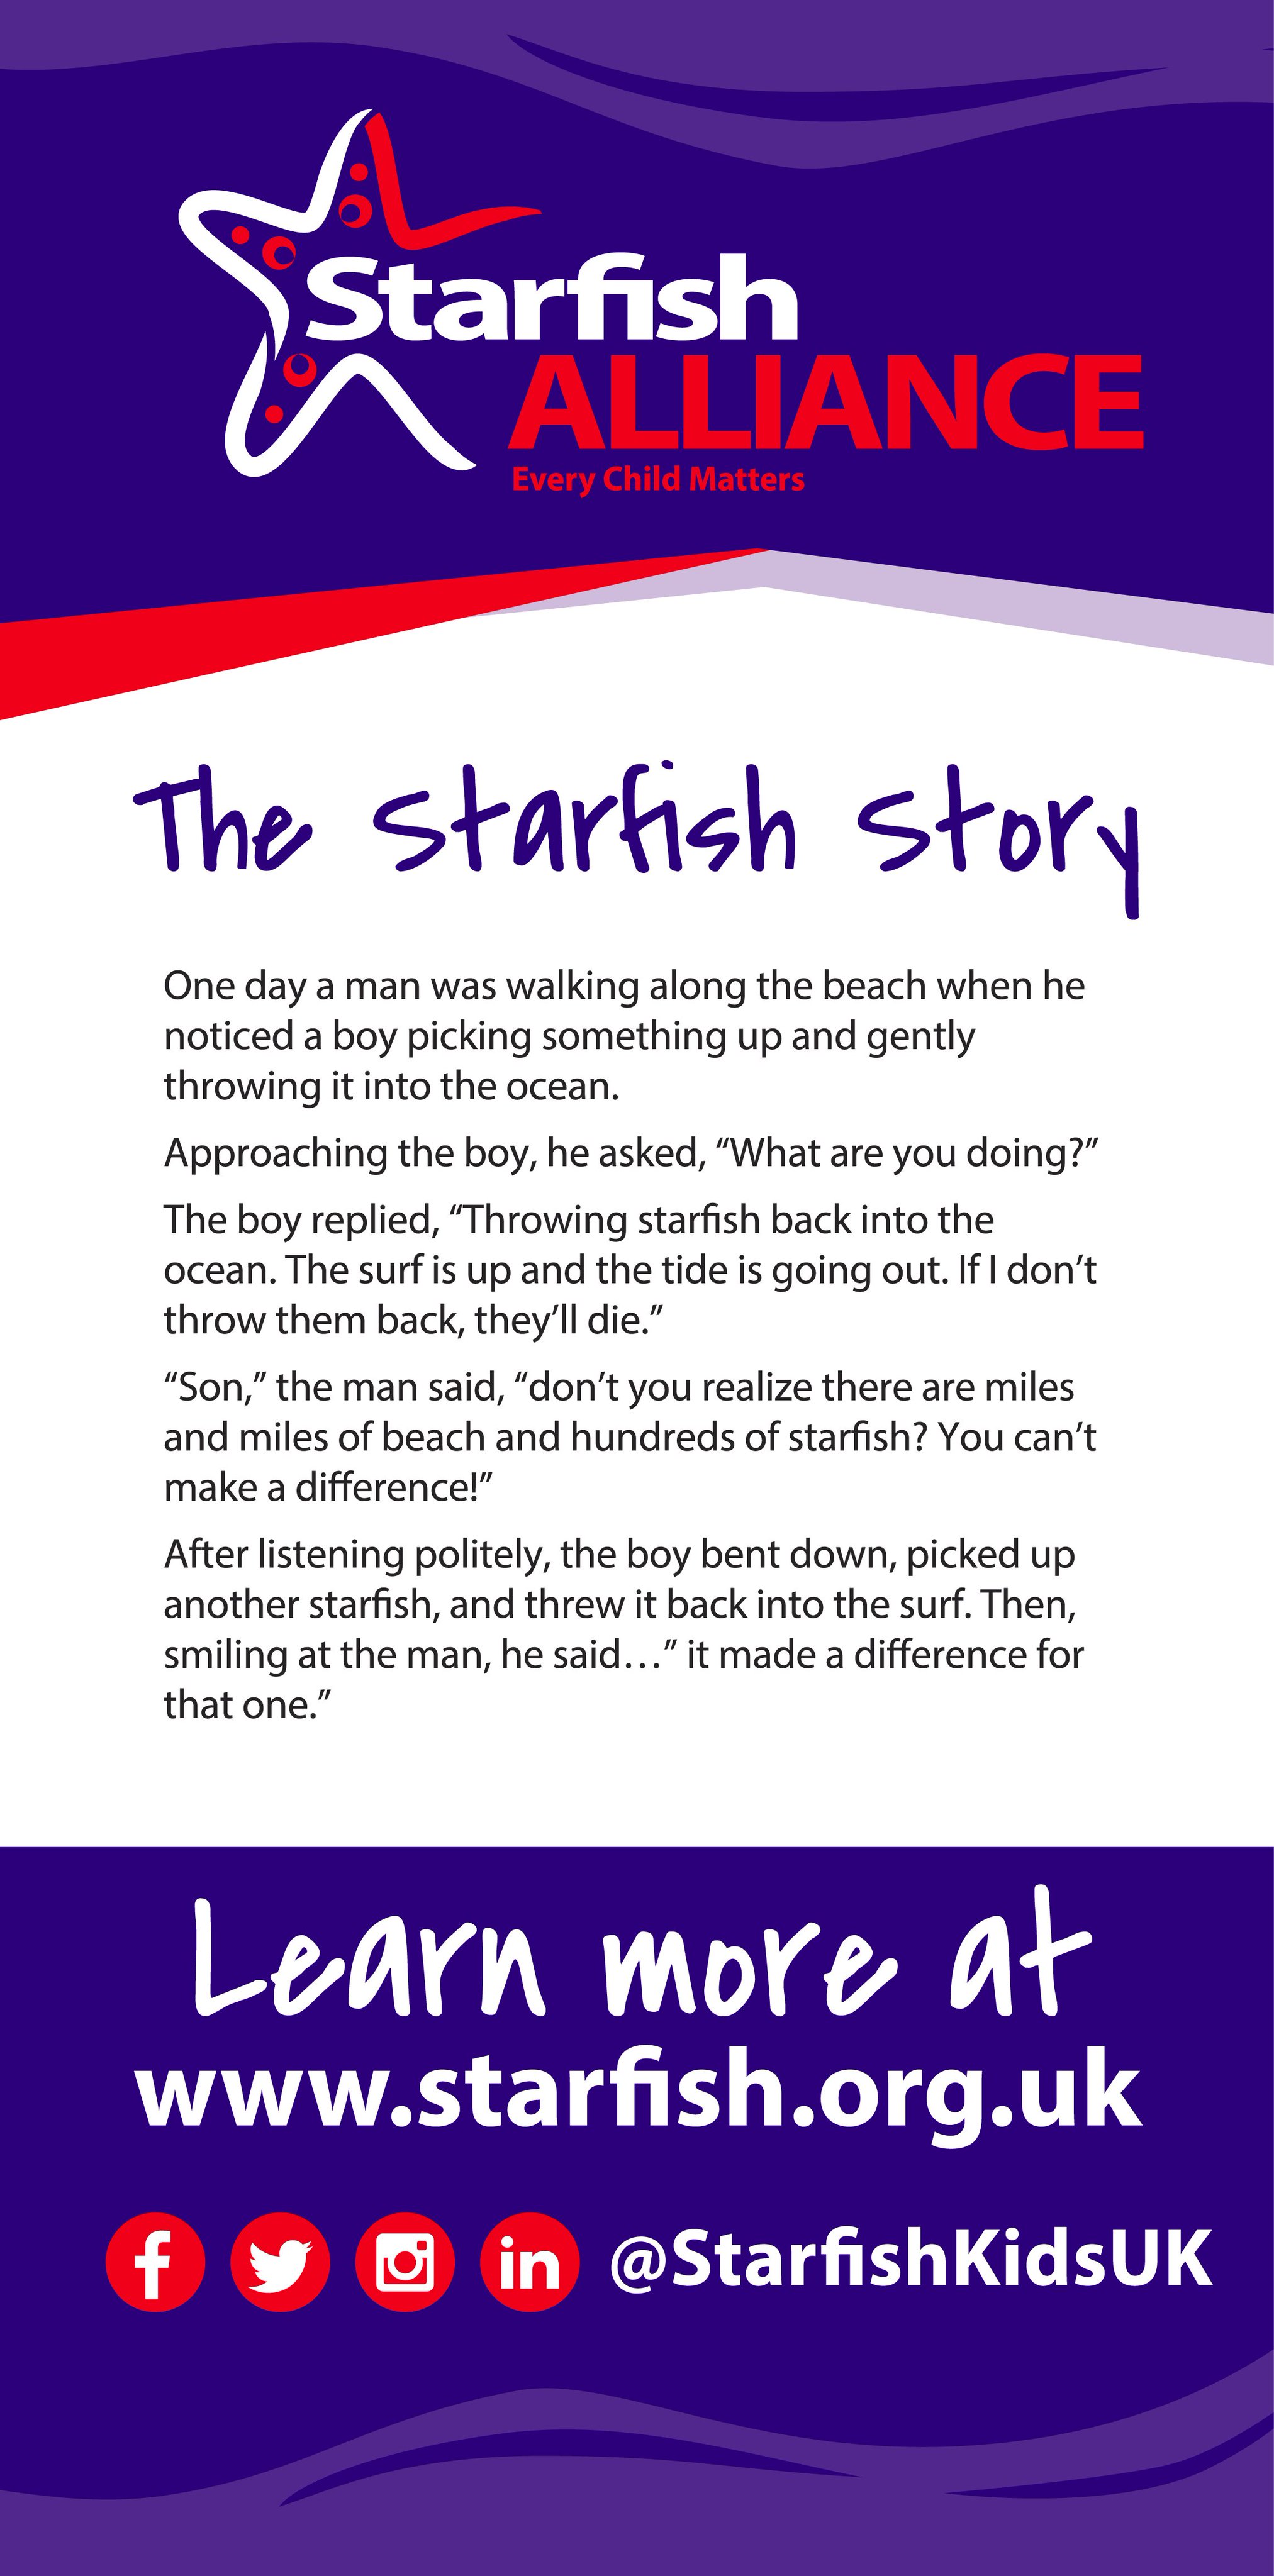 The StarFish Alliance